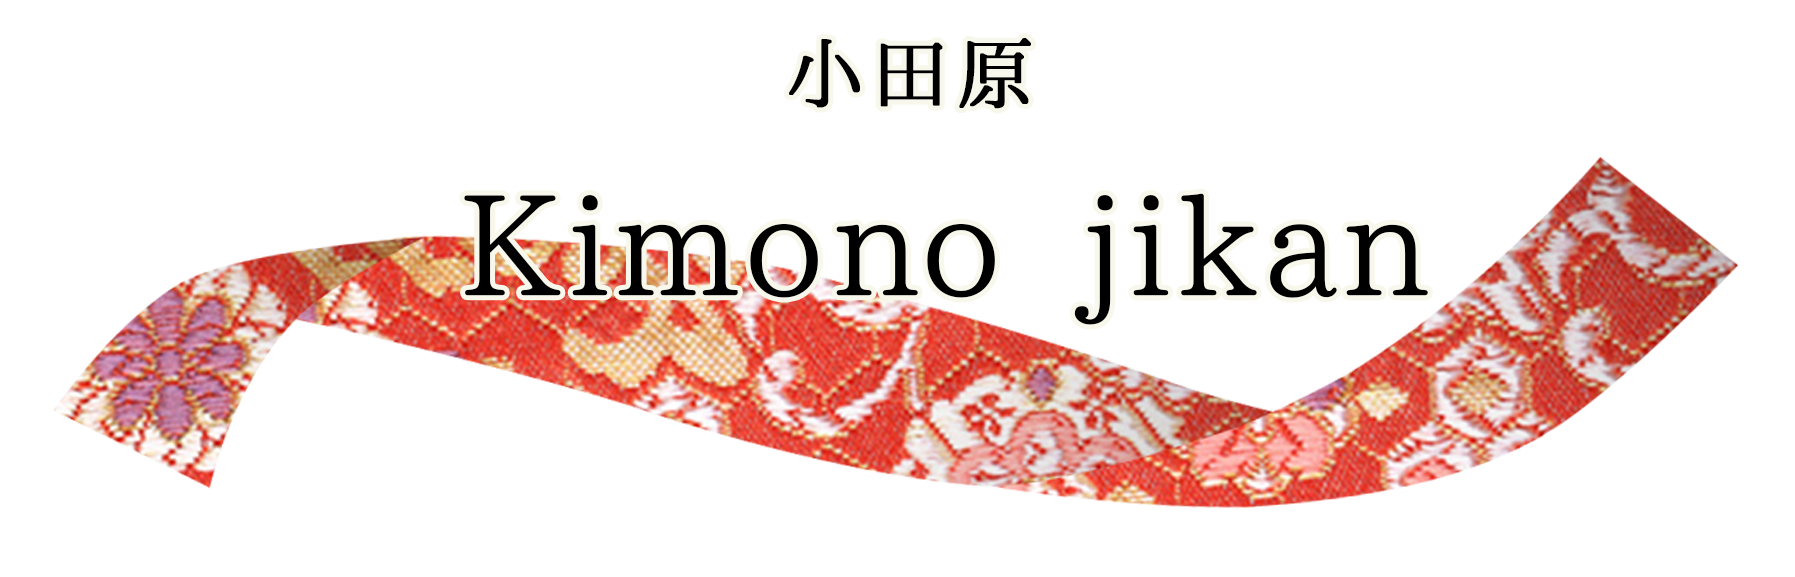 小田原 Kimono jikan